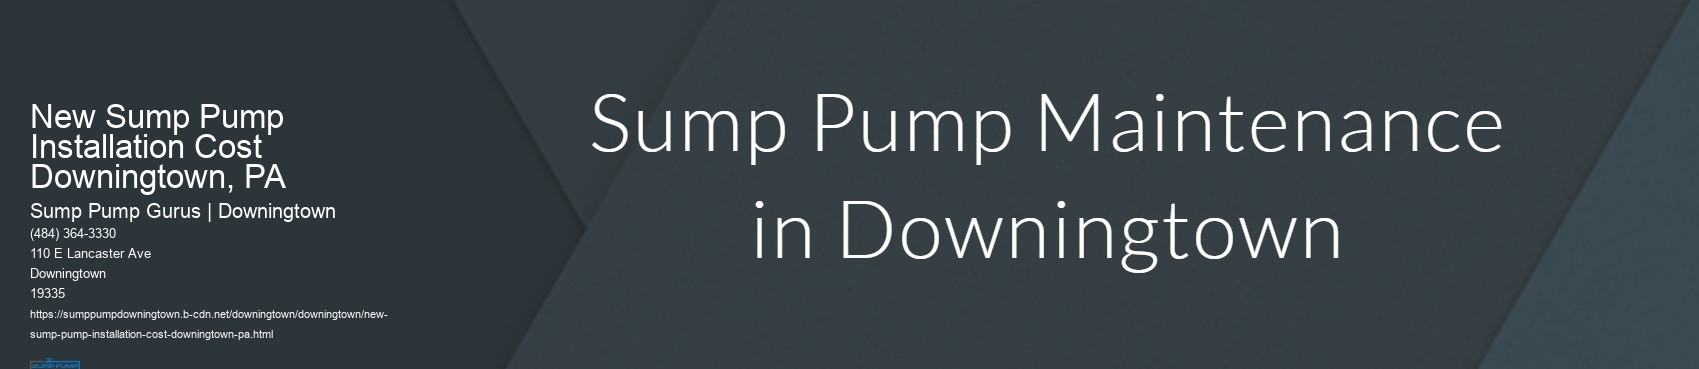 New Sump Pump Installation Cost Downingtown, PA